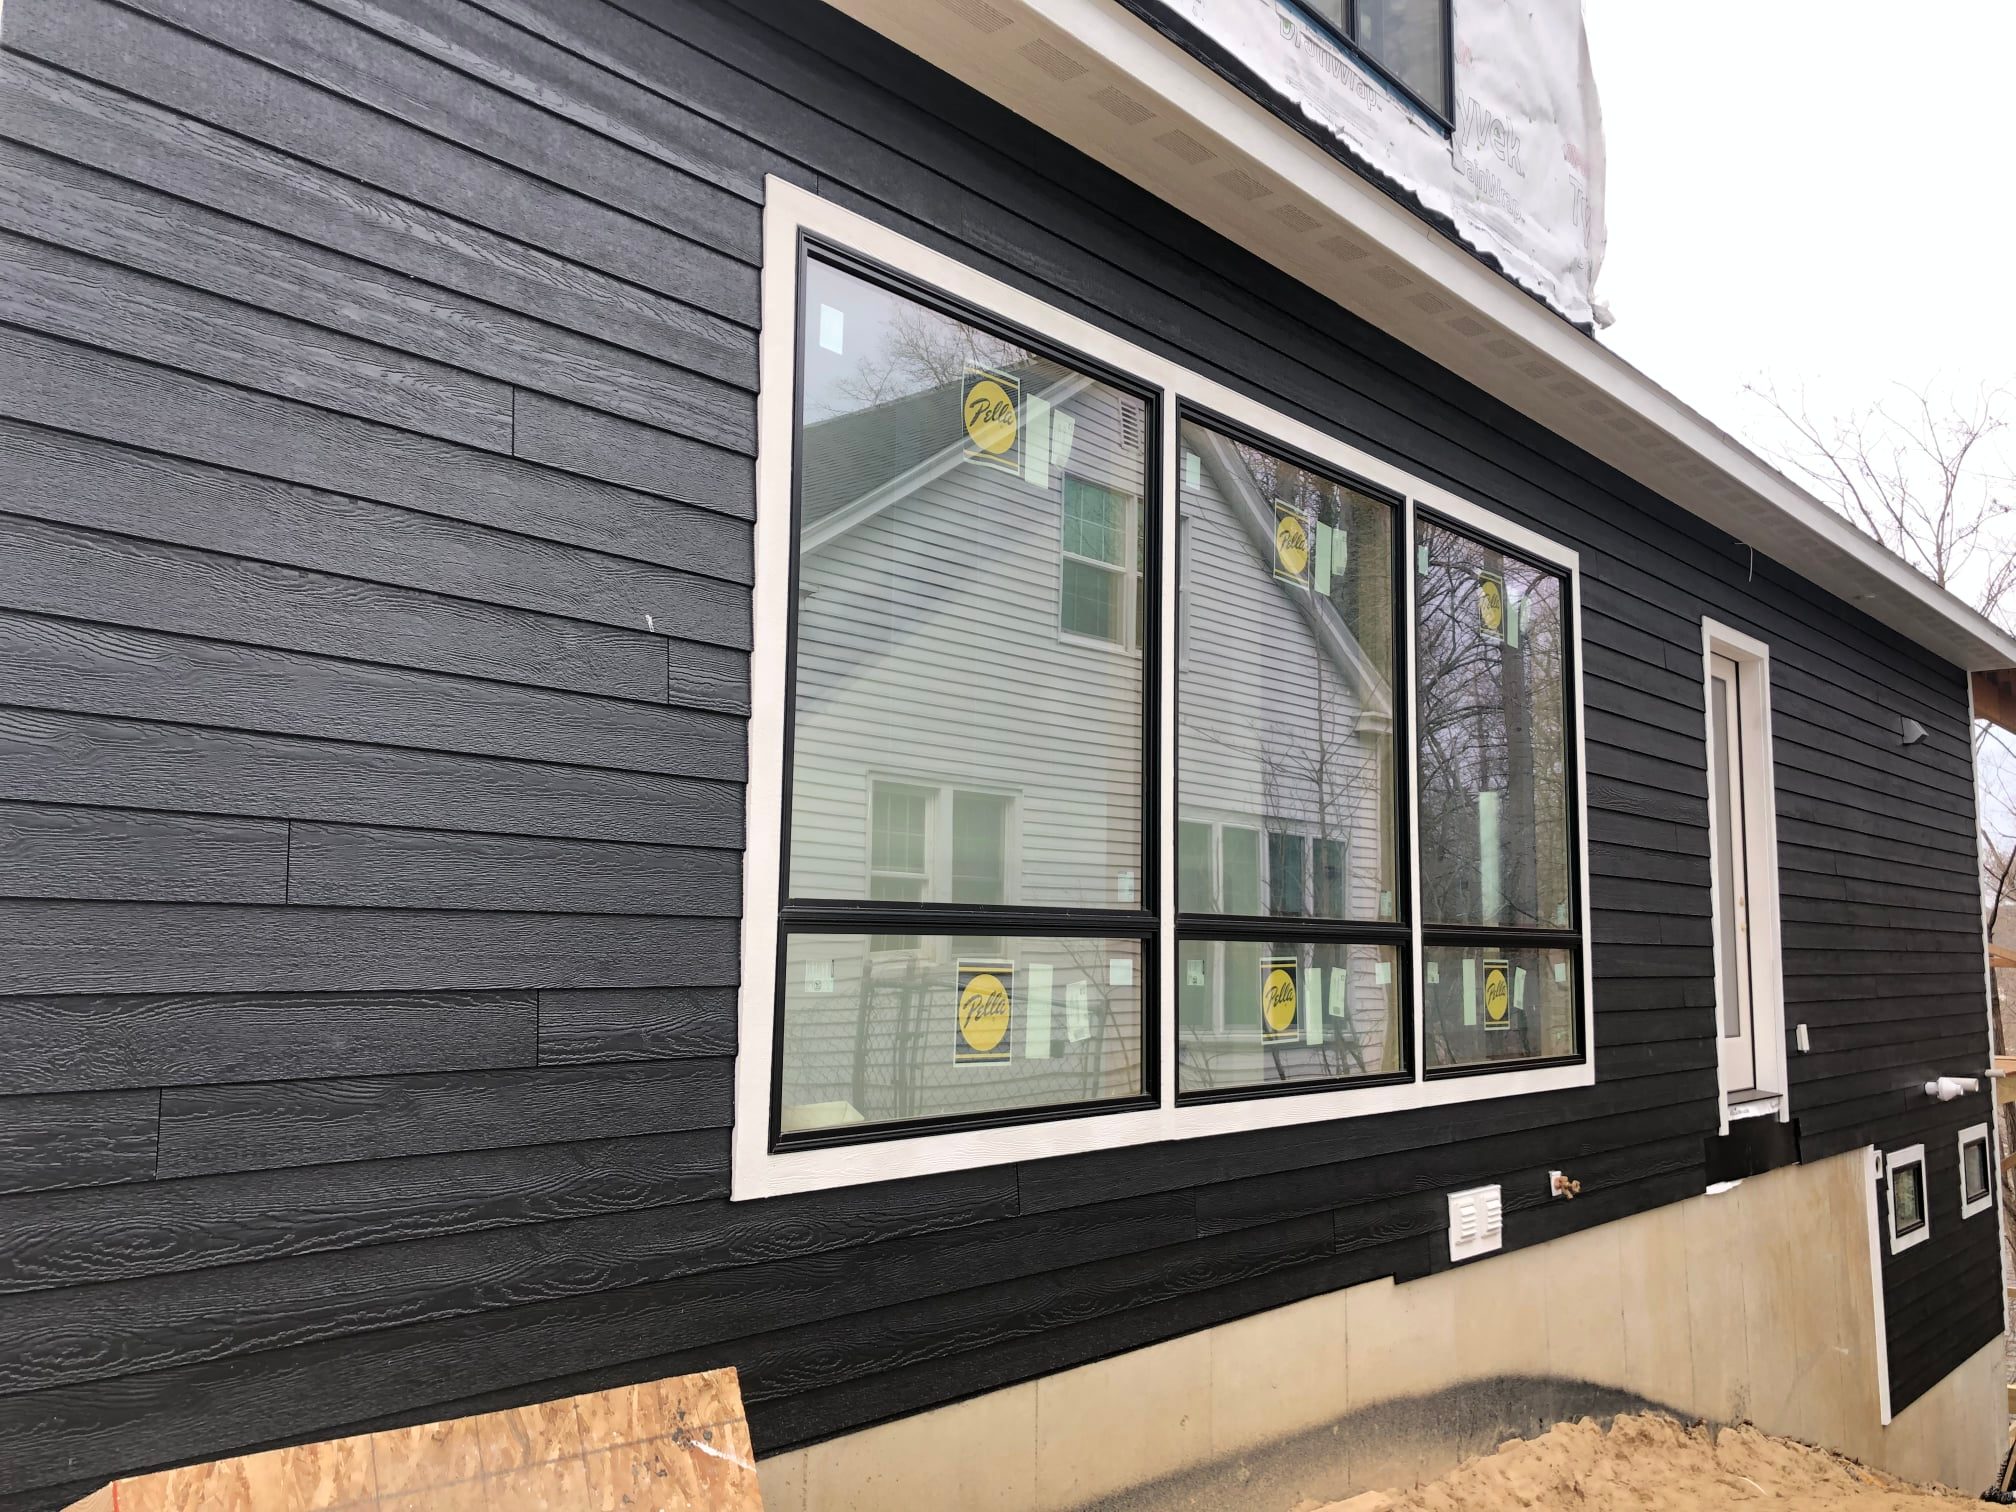 custom home with black wood sidings, large windows